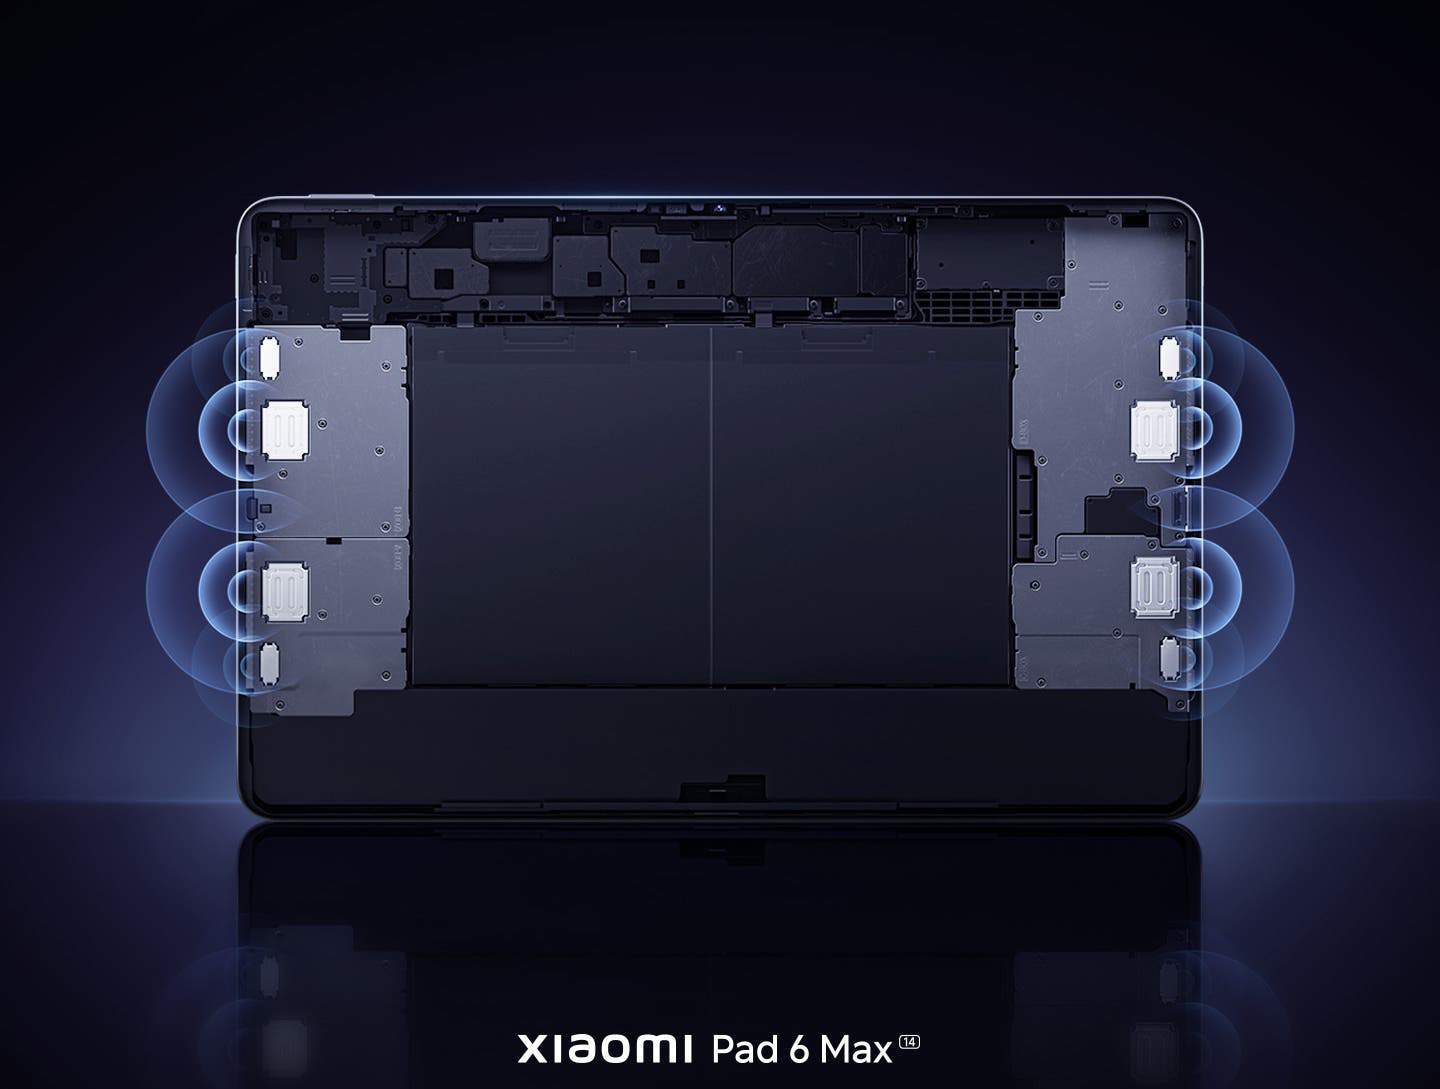 Speaker system of Xiaomi Pad 6 Max